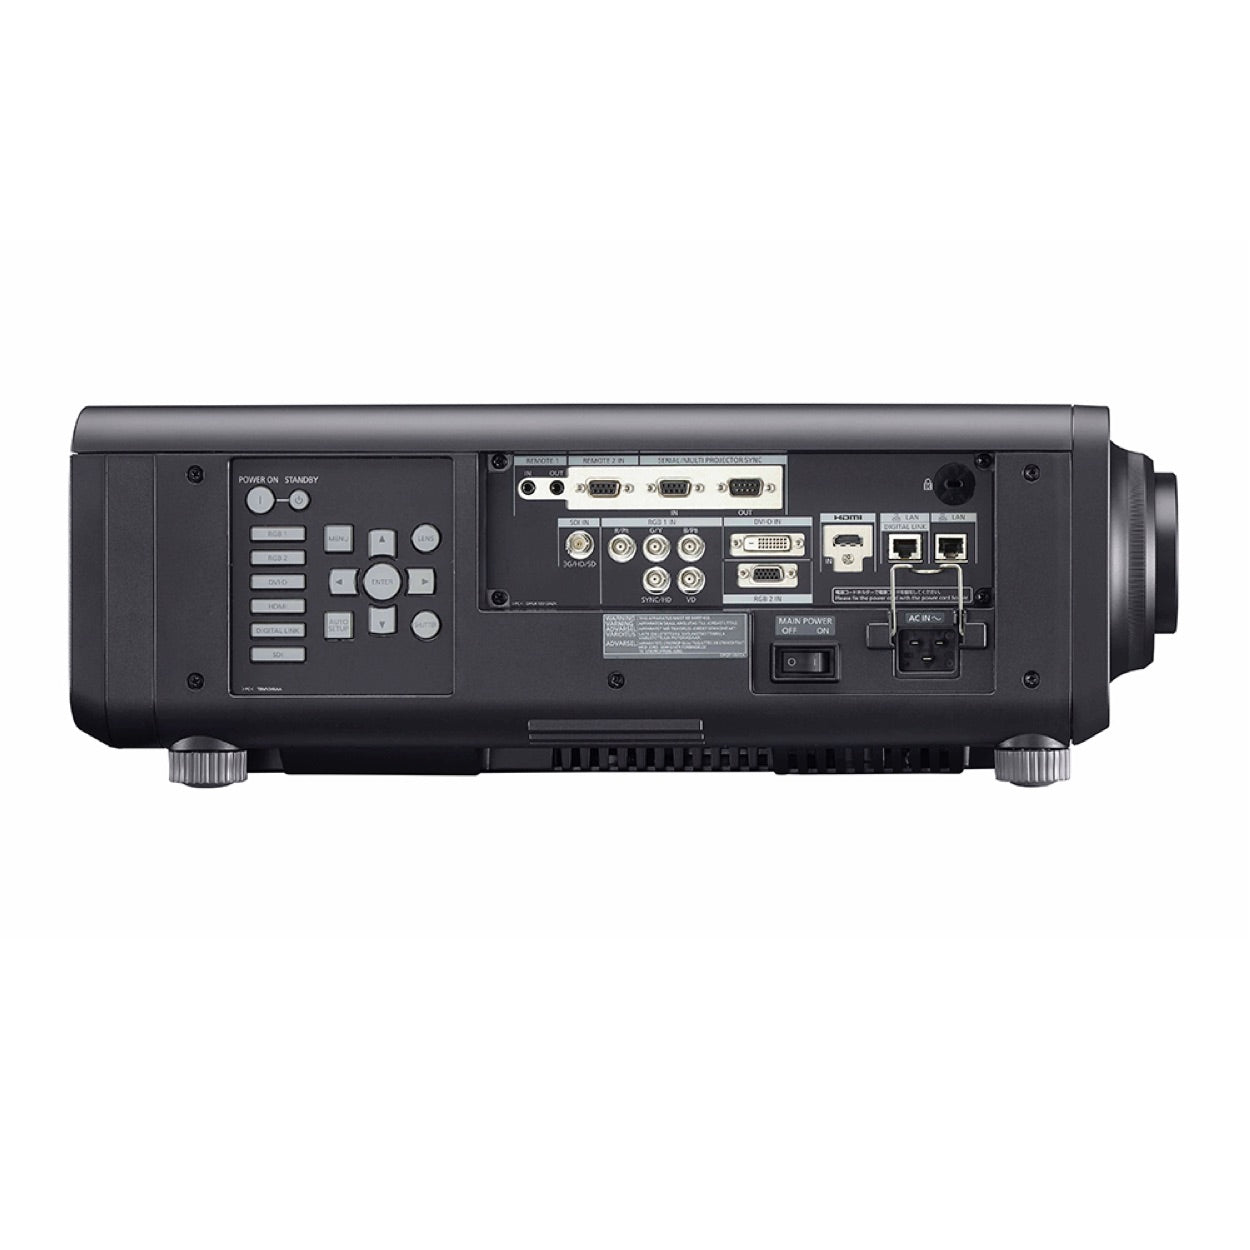 Panasonic PT-RZ790BU - 1-Chip DLP WUXGA Laser Projector, black, side